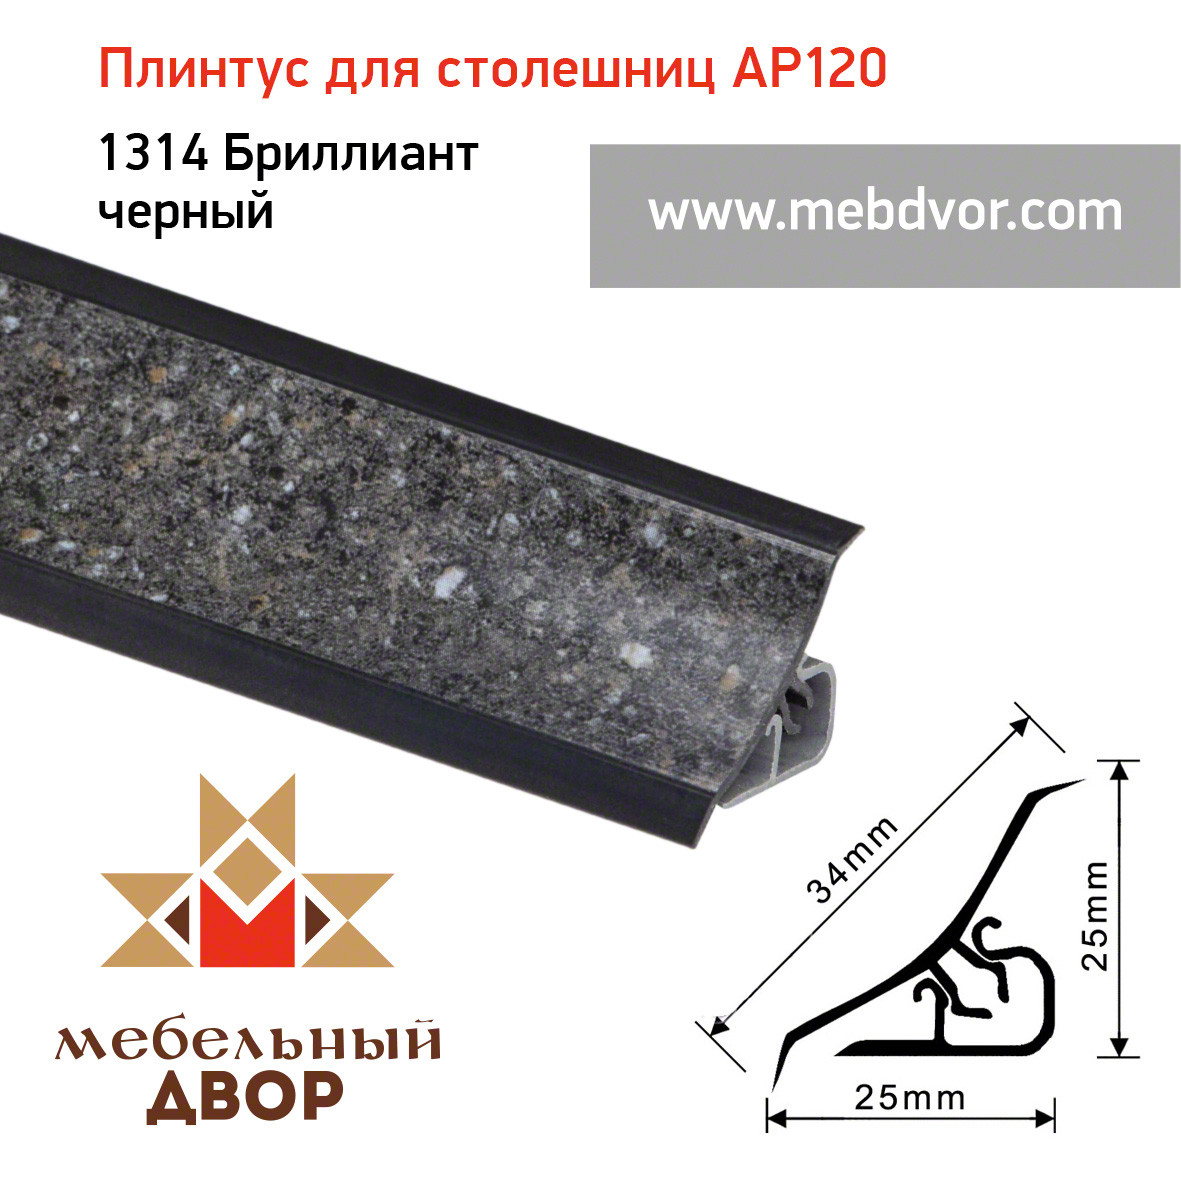 Плинтус для столешниц AP120 (1314_Бриллиант черный), 3000 mm